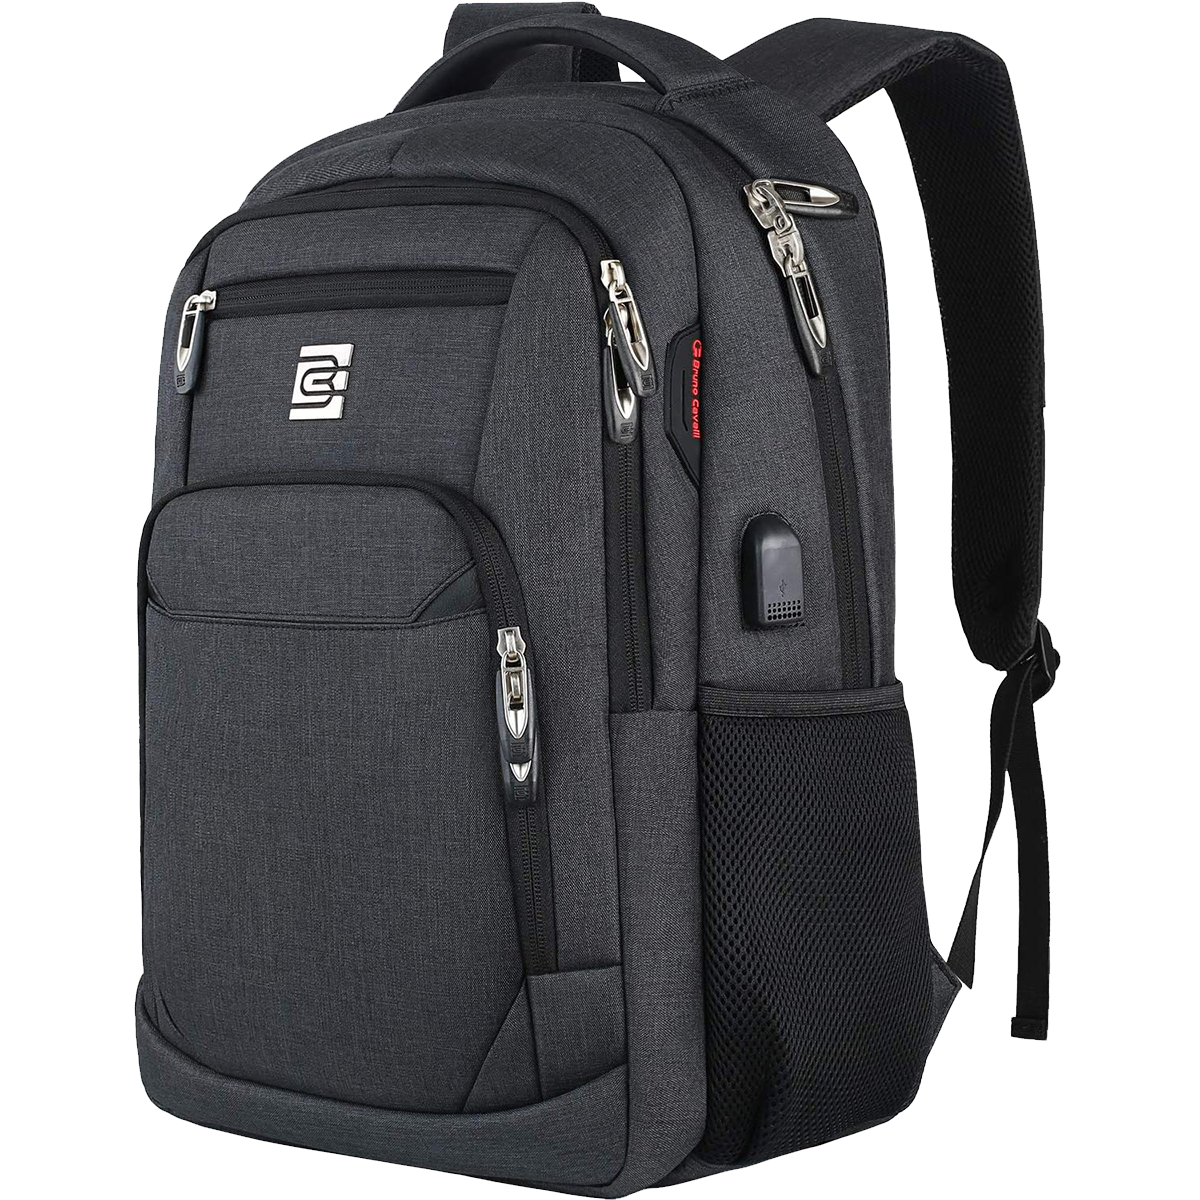 Volher 15.4 laptop backpack in dark grey